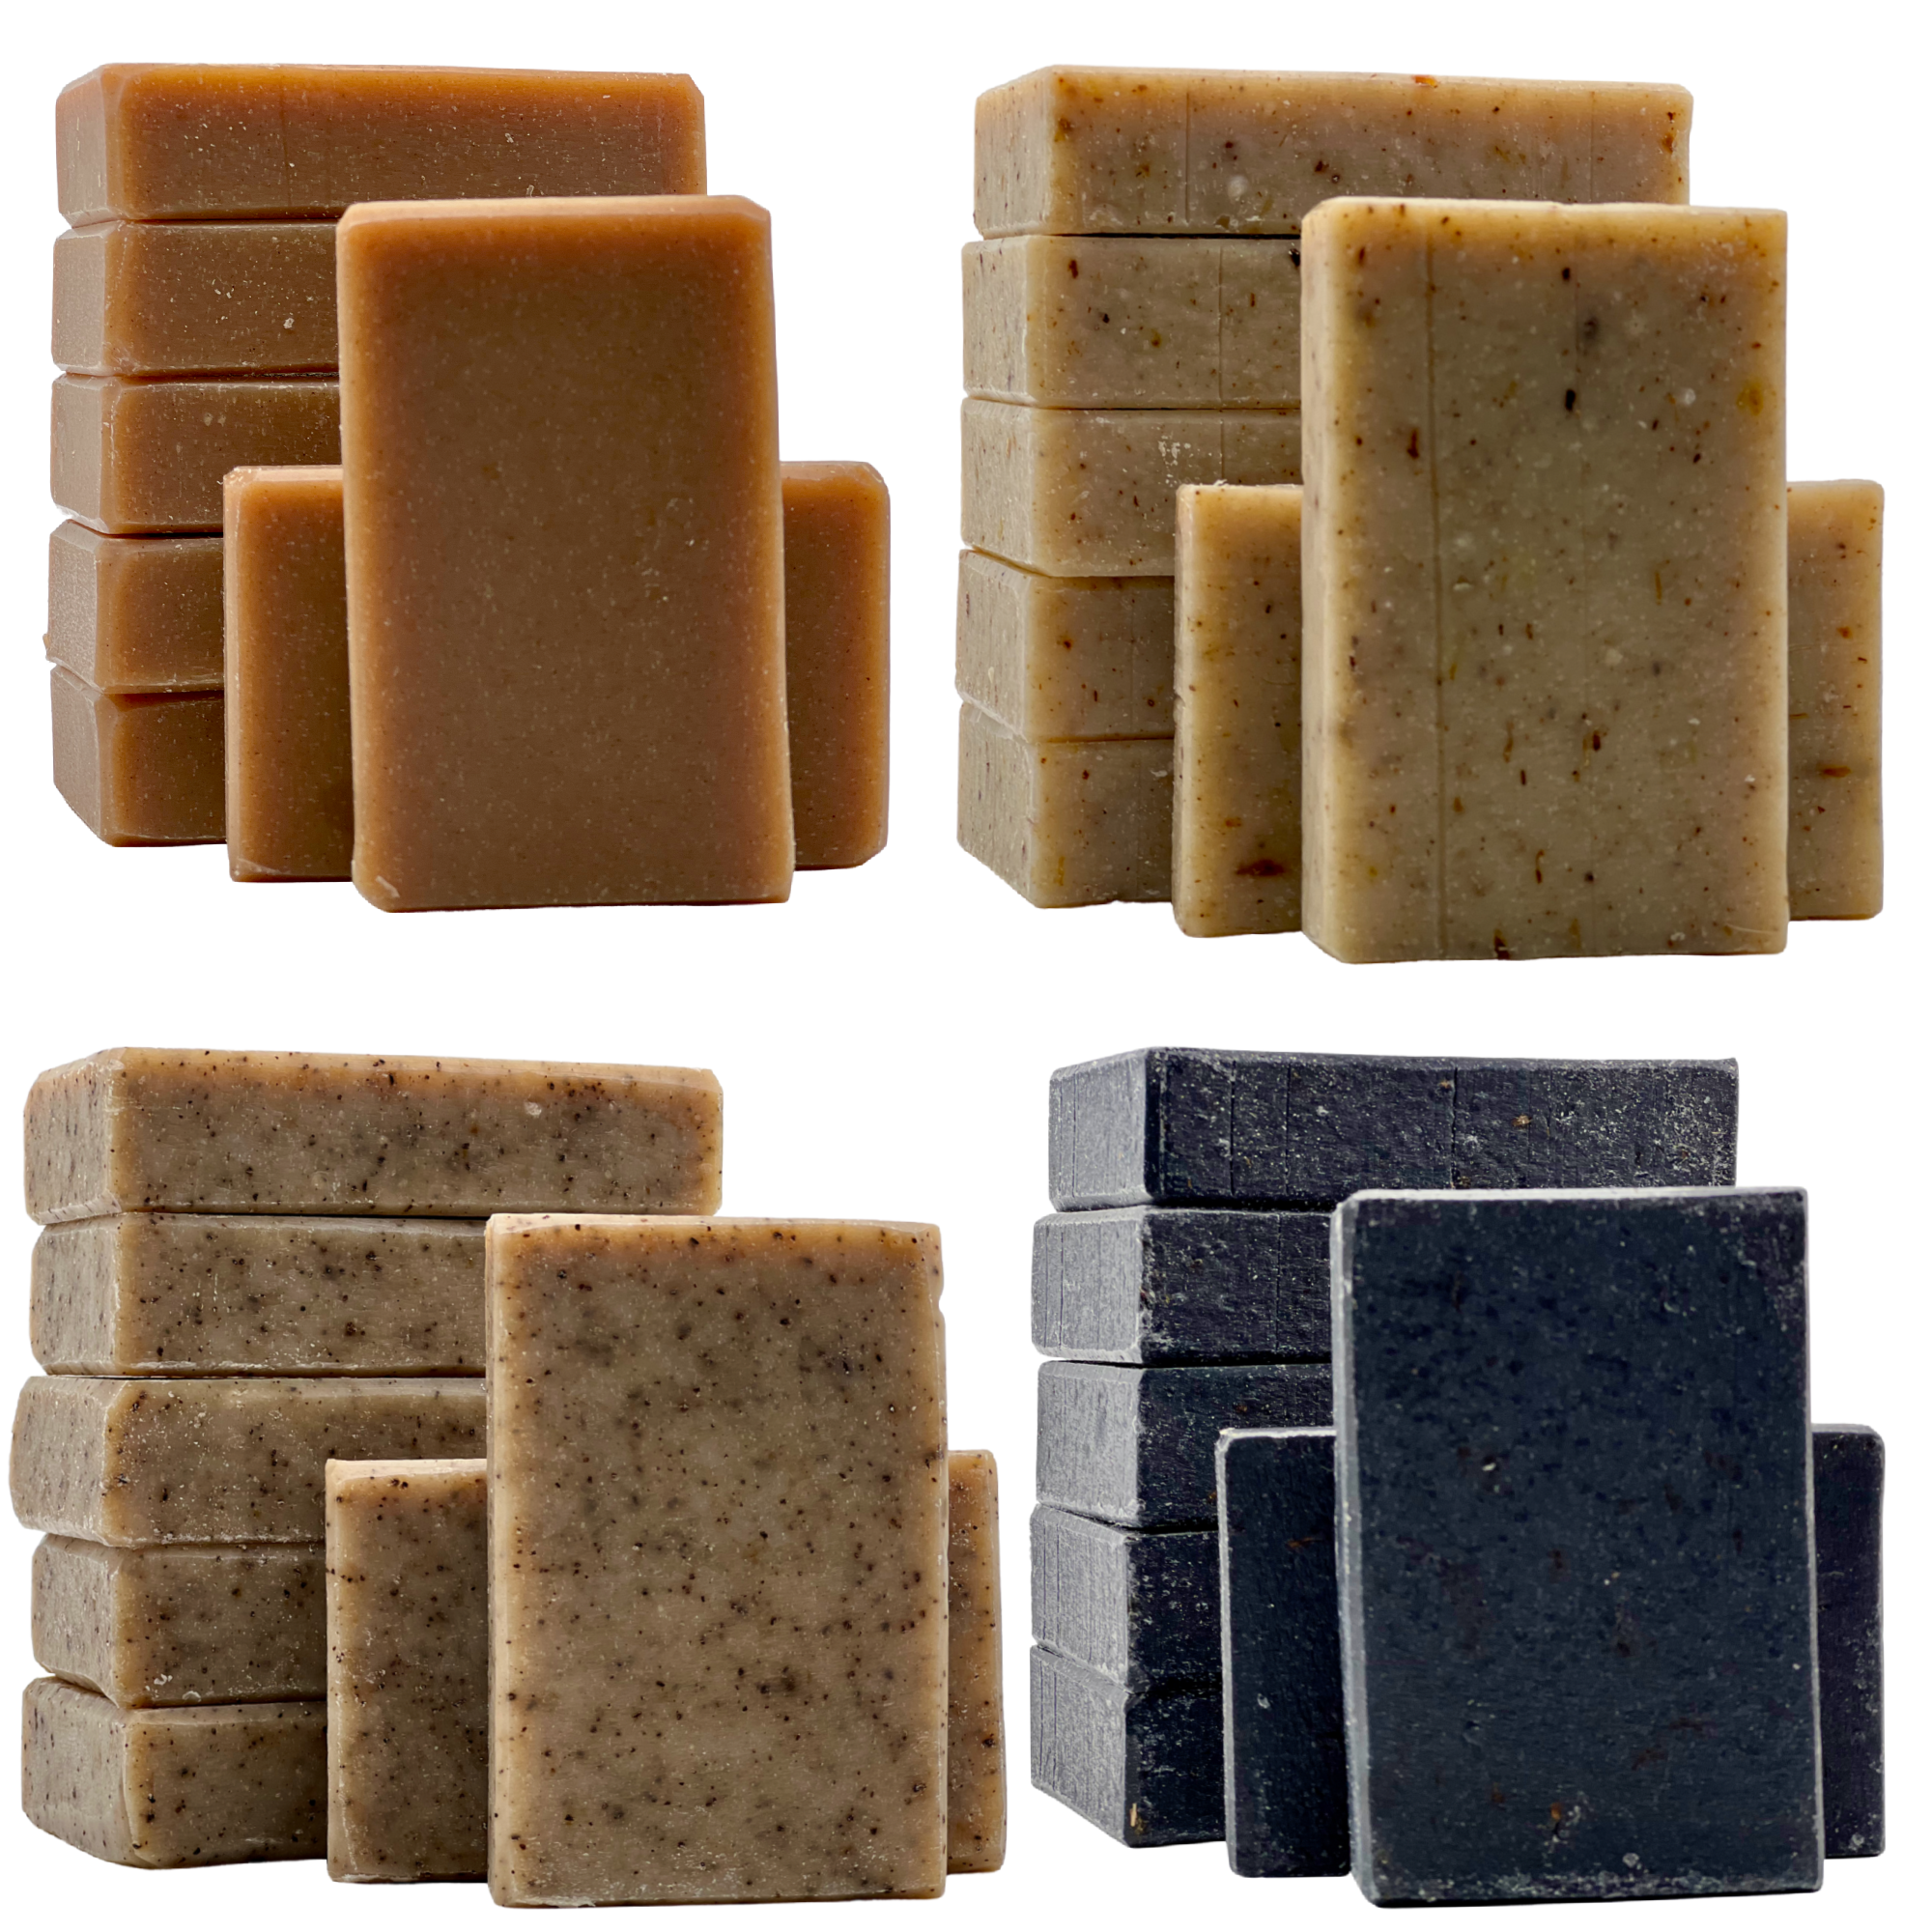 Mechanic's Soap Handmade Soap, Natural Soap, Vegan Soap, Homemade Soap,  Wholesale Soap, Bulk Favors Soap, Cut Into Bar Soap 